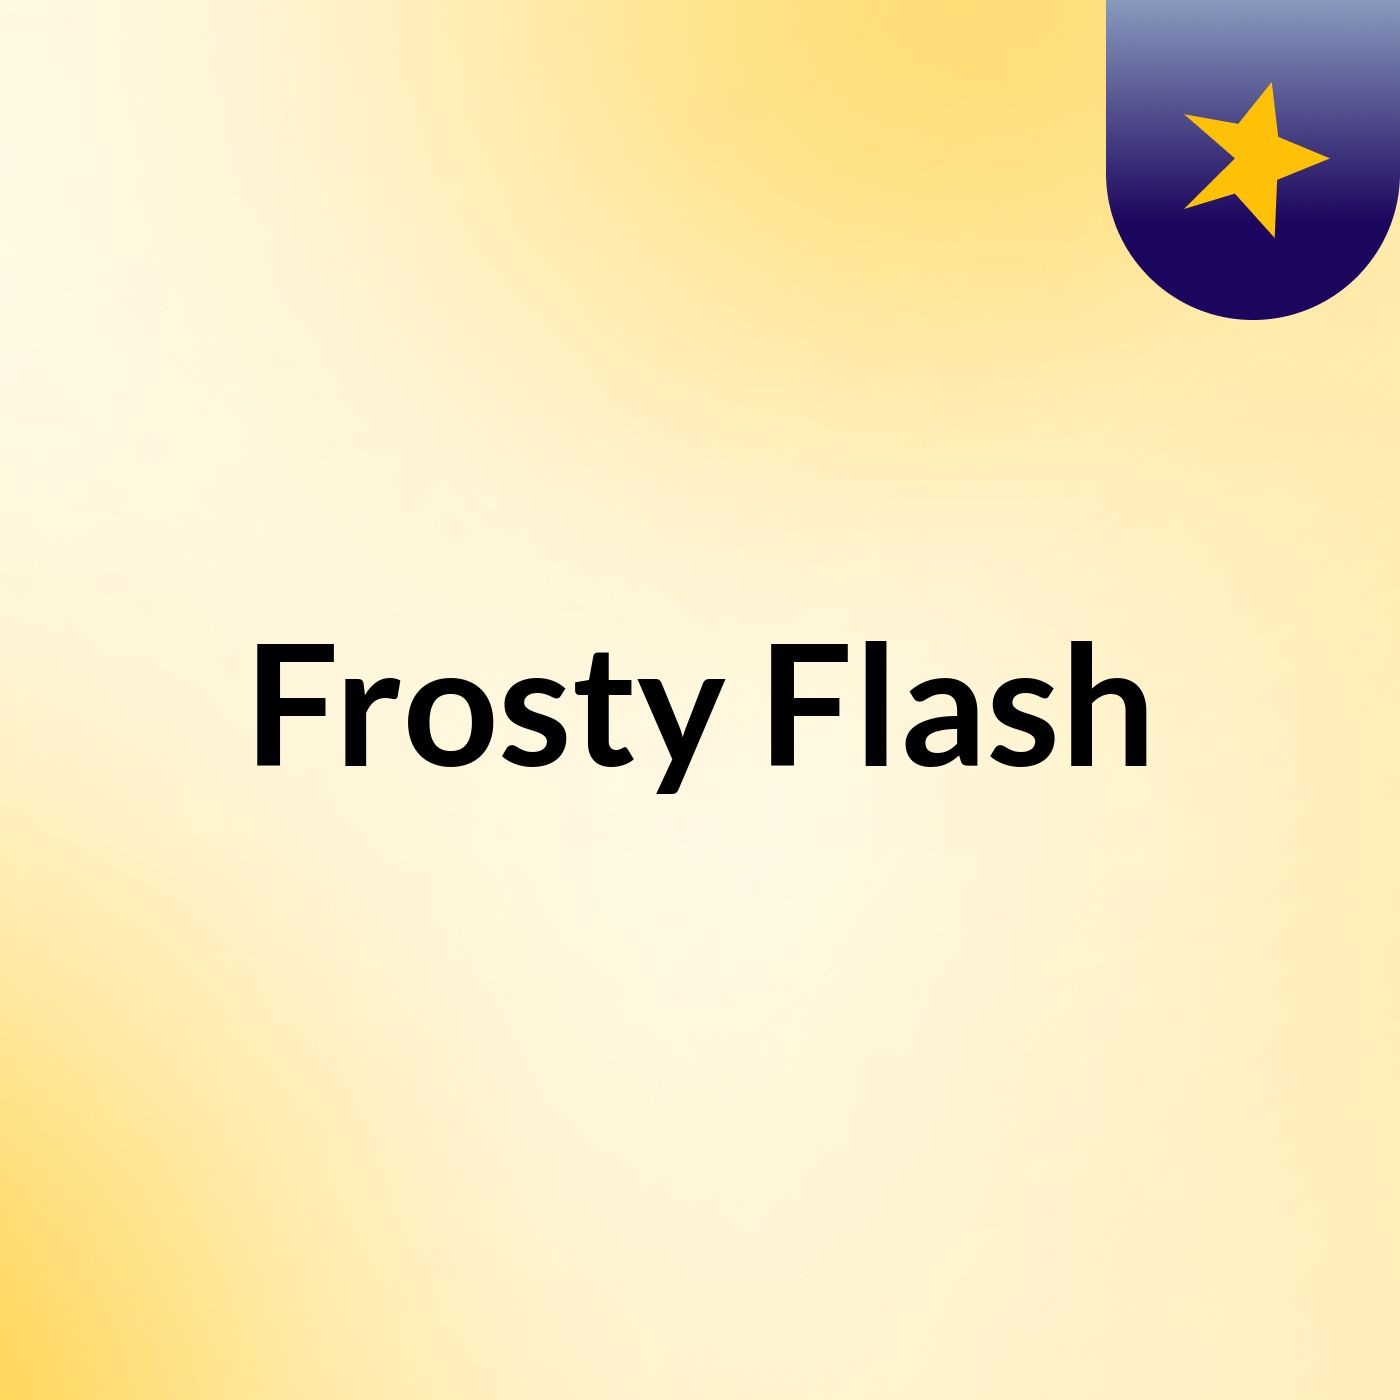 Frosty Flash